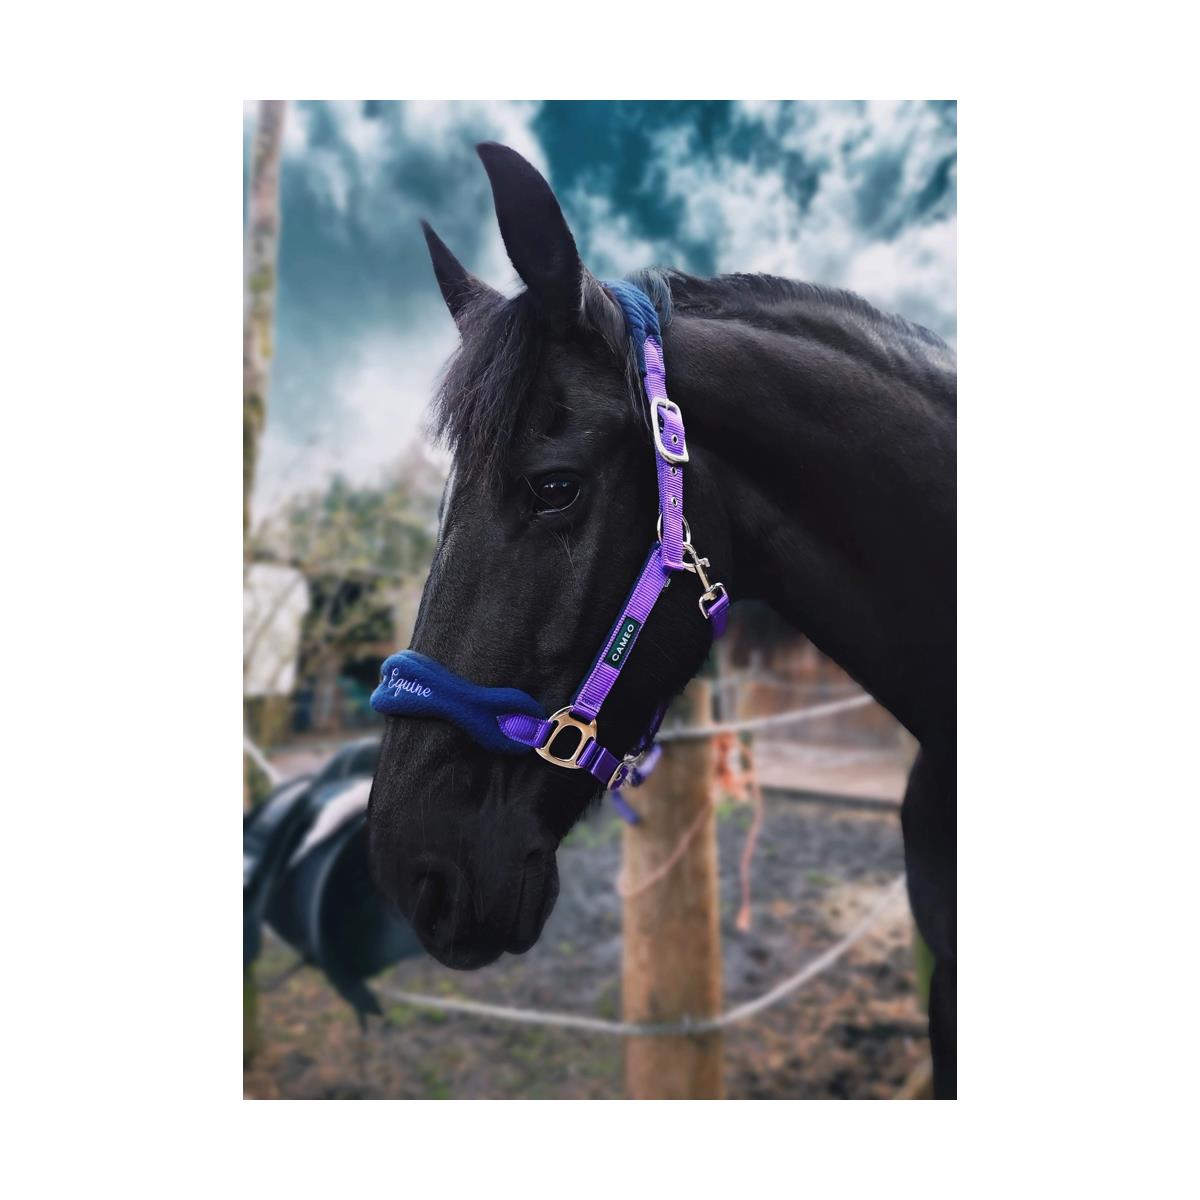 Cameo Equine Elite Show Headcollar & Rope Padded Fleece Braid Premium Fittings - Just Horse Riders